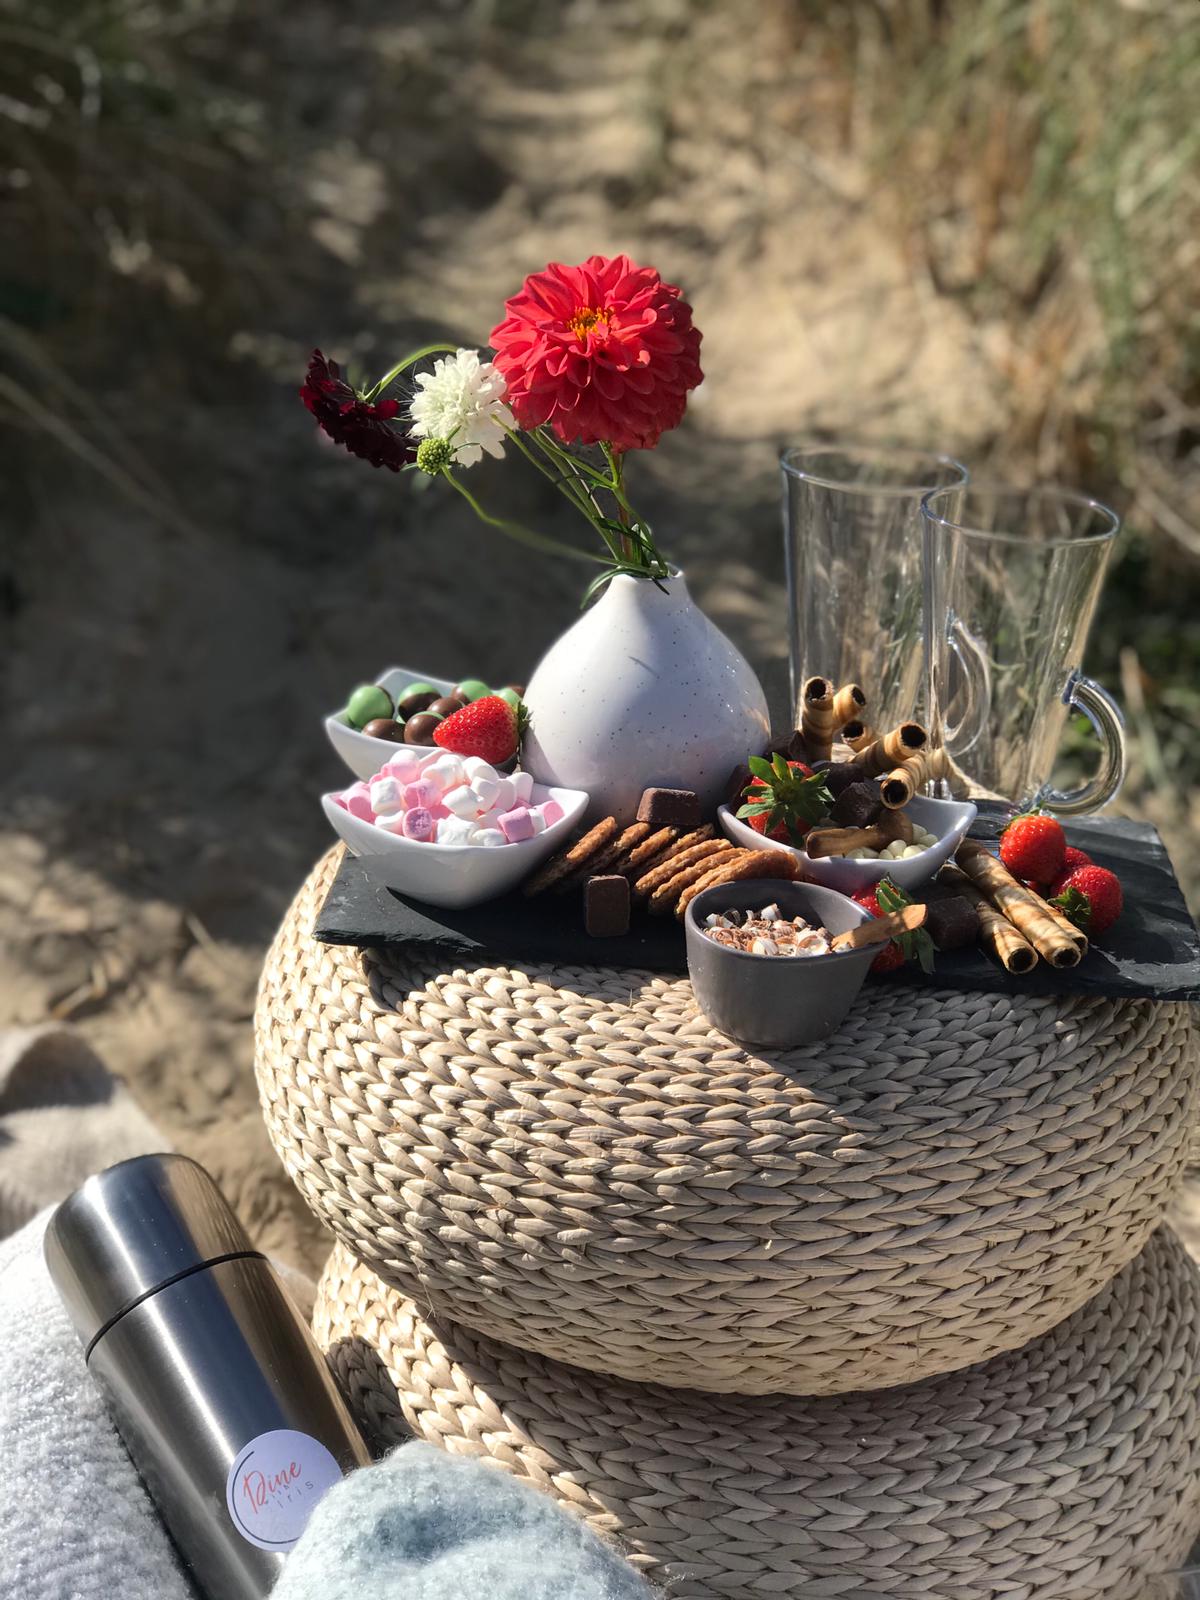 bespoke picnic setup on the beach